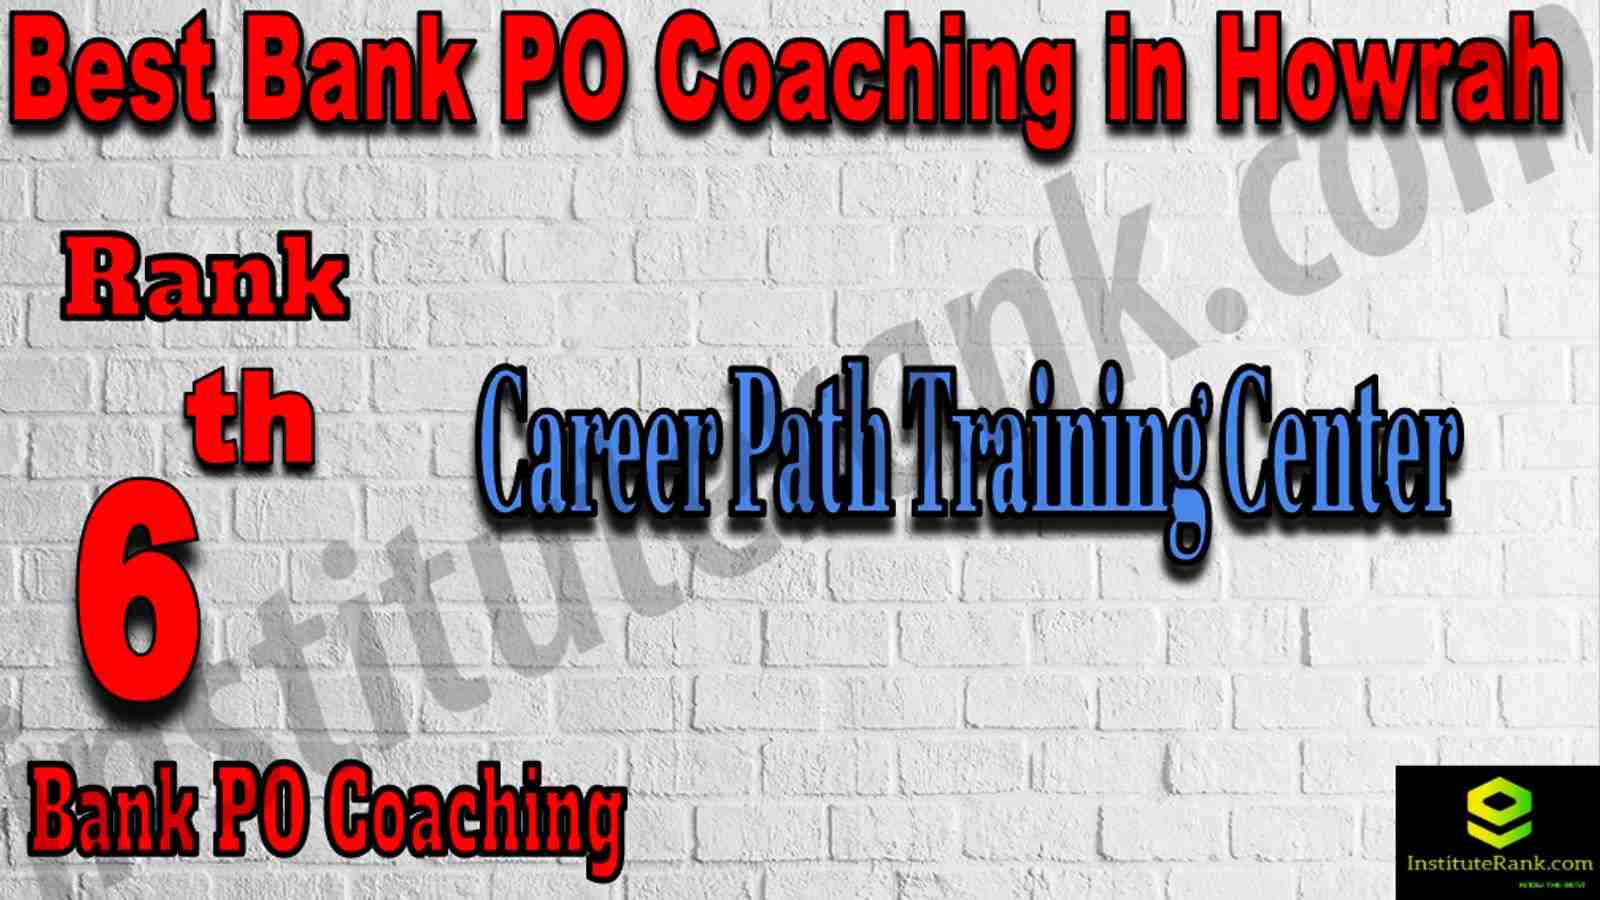 6th Best Bank PO Coaching in Howrah